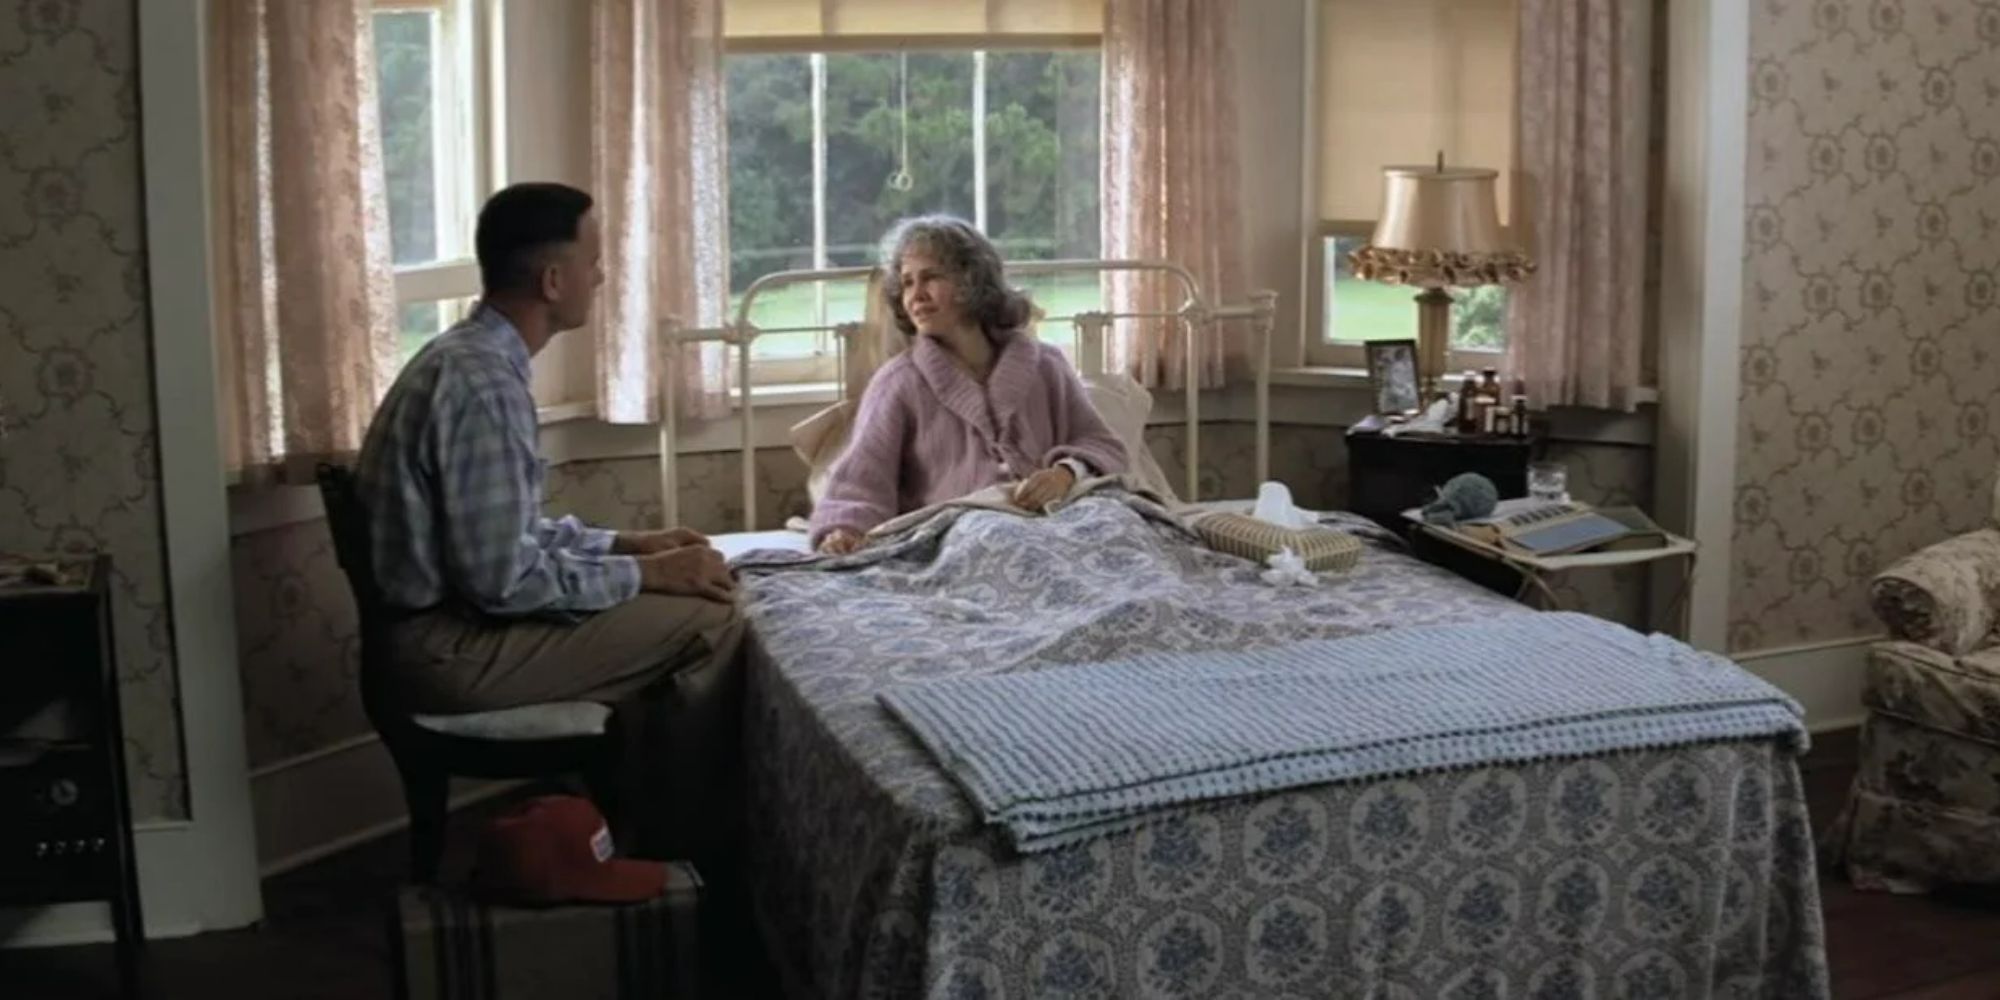 Forrest Gump (Tom Hanks) talking to his mother before her death in Forrest Gump